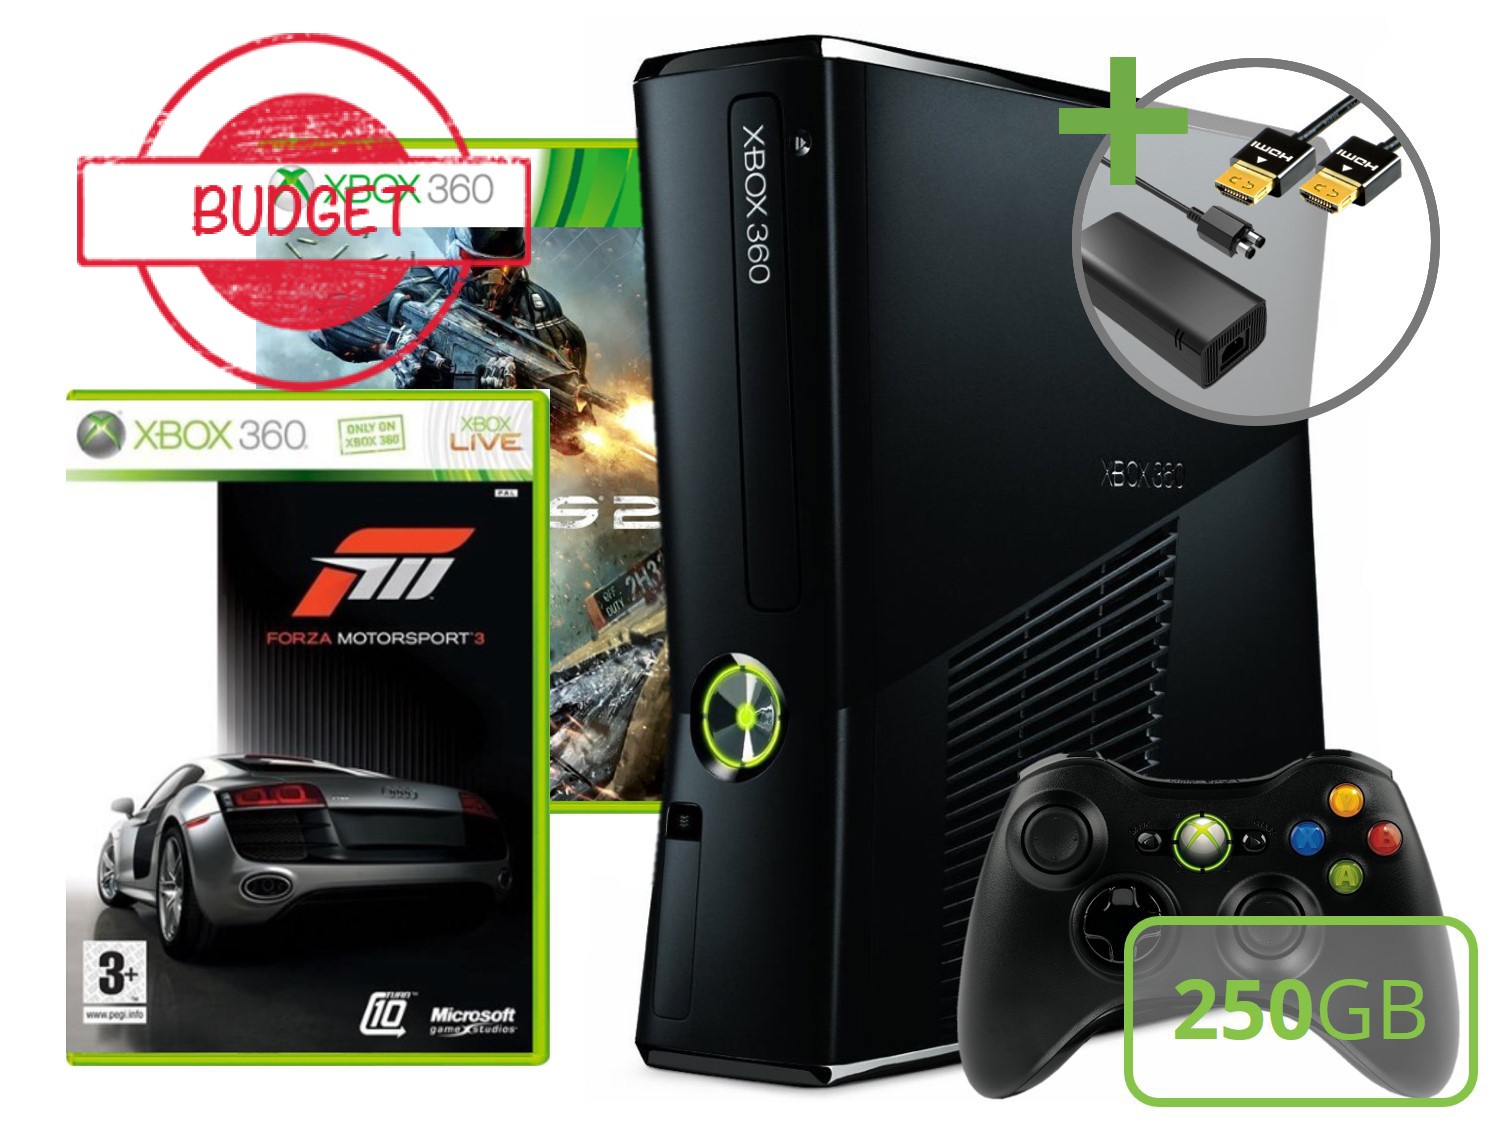 Microsoft Xbox 360 Slim Starter Pack - Forza 3 and Crisis 2 Edition - Budget - Xbox 360 Hardware